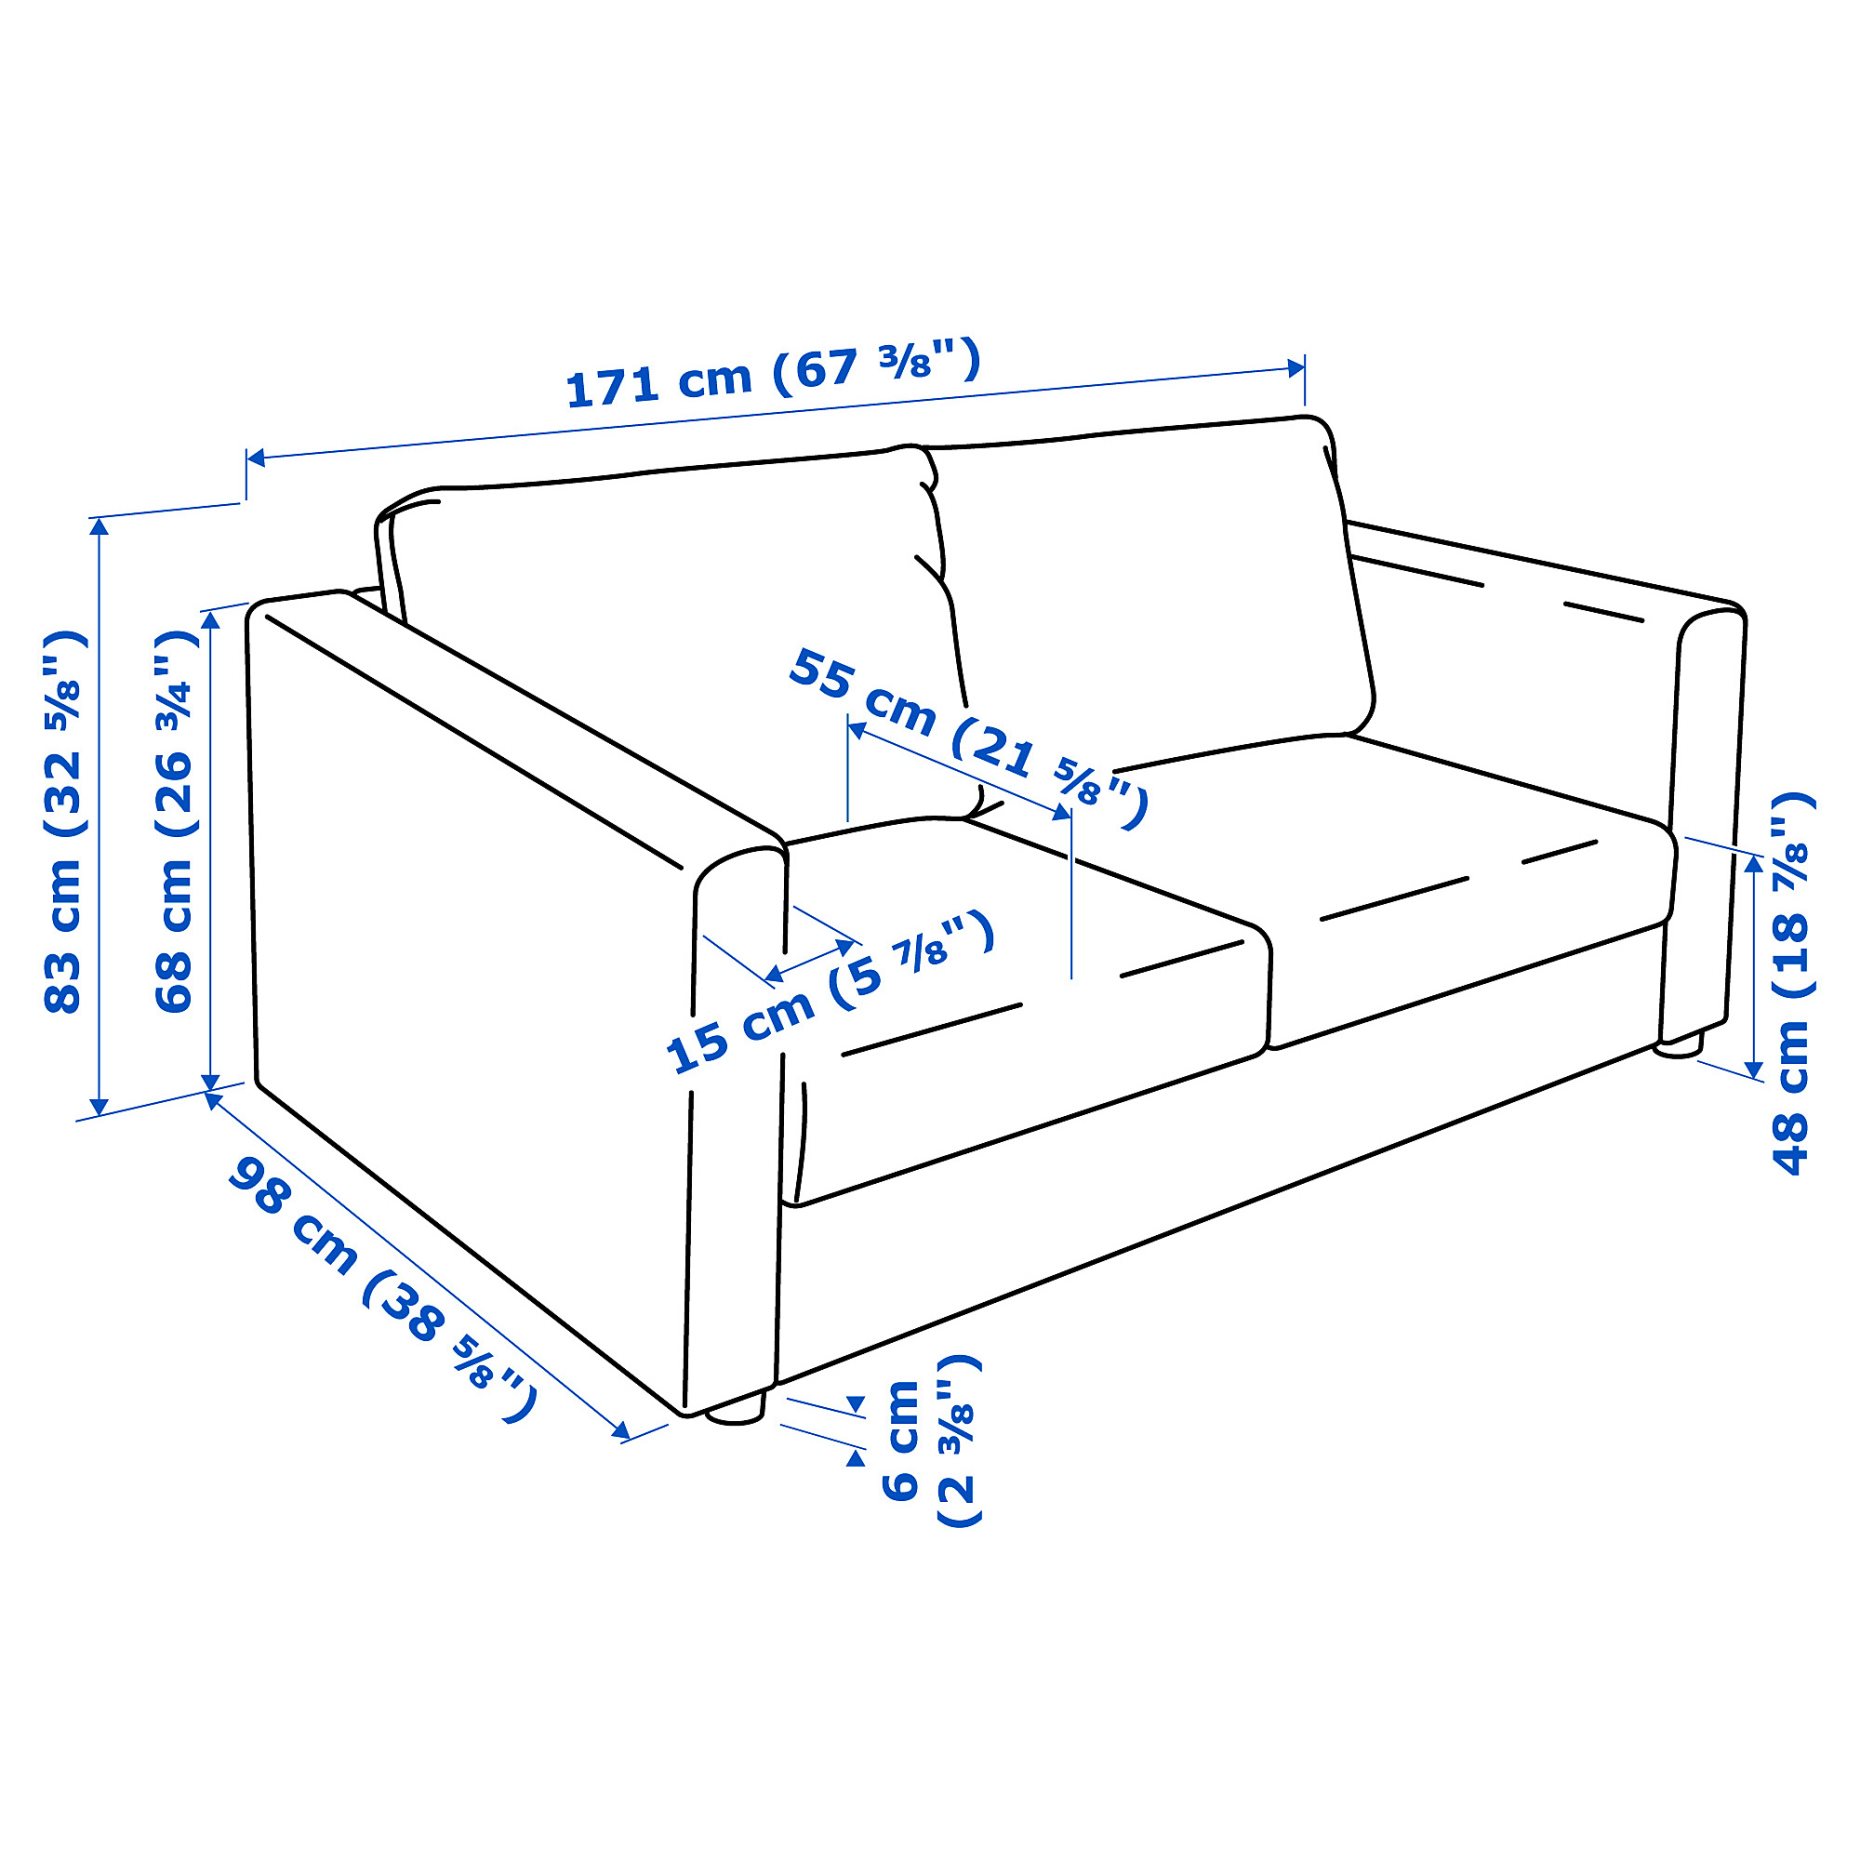 VIMLE, 2-seat sofa, 093.990.19